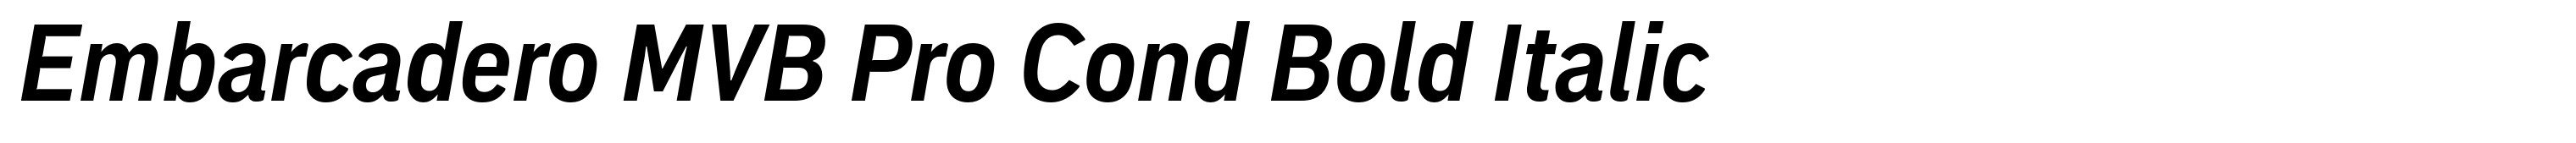 Embarcadero MVB Pro Cond Bold Italic